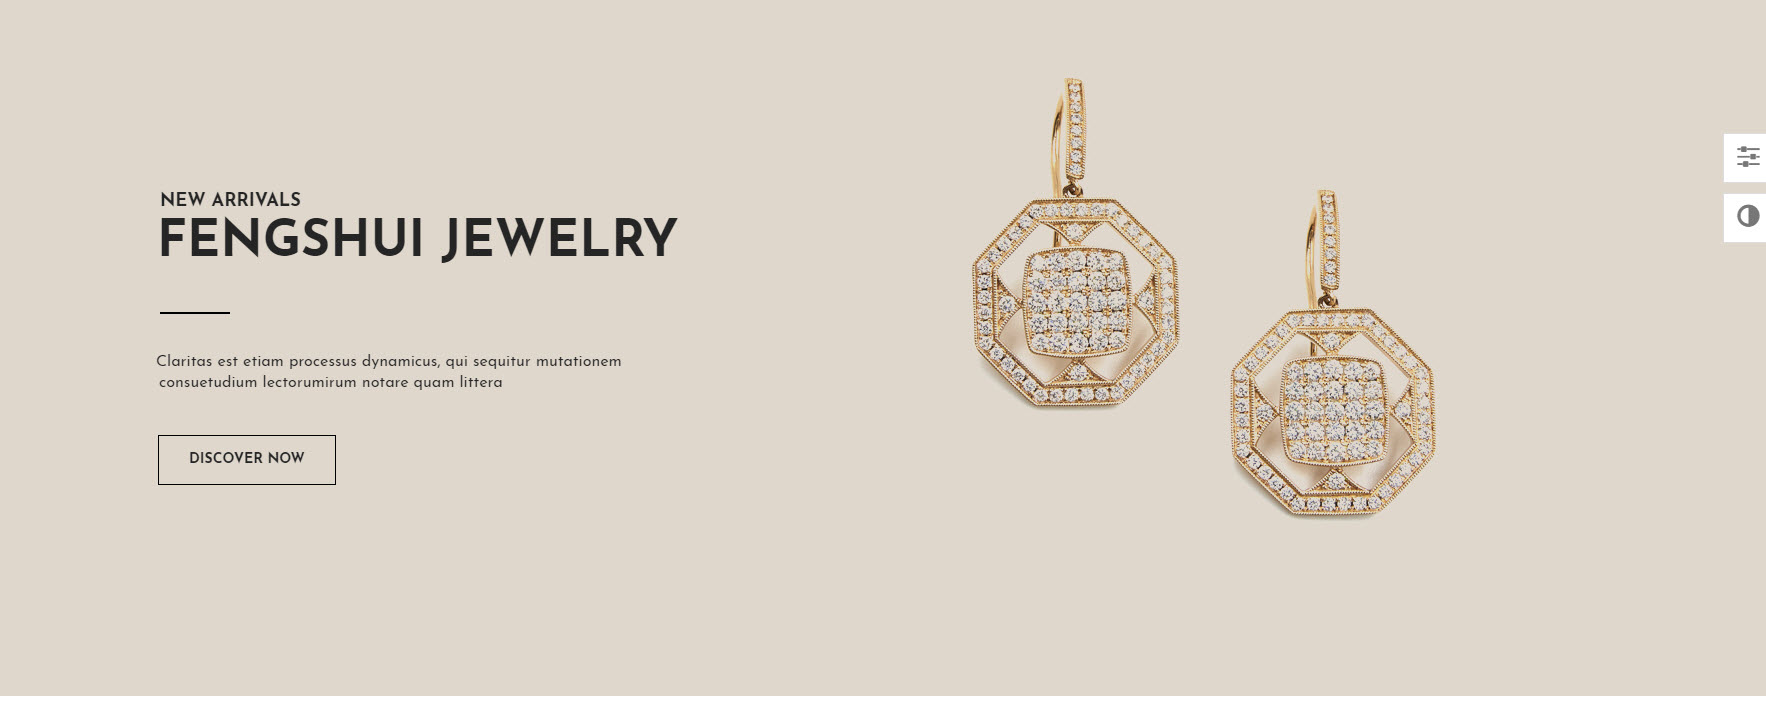 10+ Best Jewelry PrestaShop Themes For Fashion eCommerce Websites